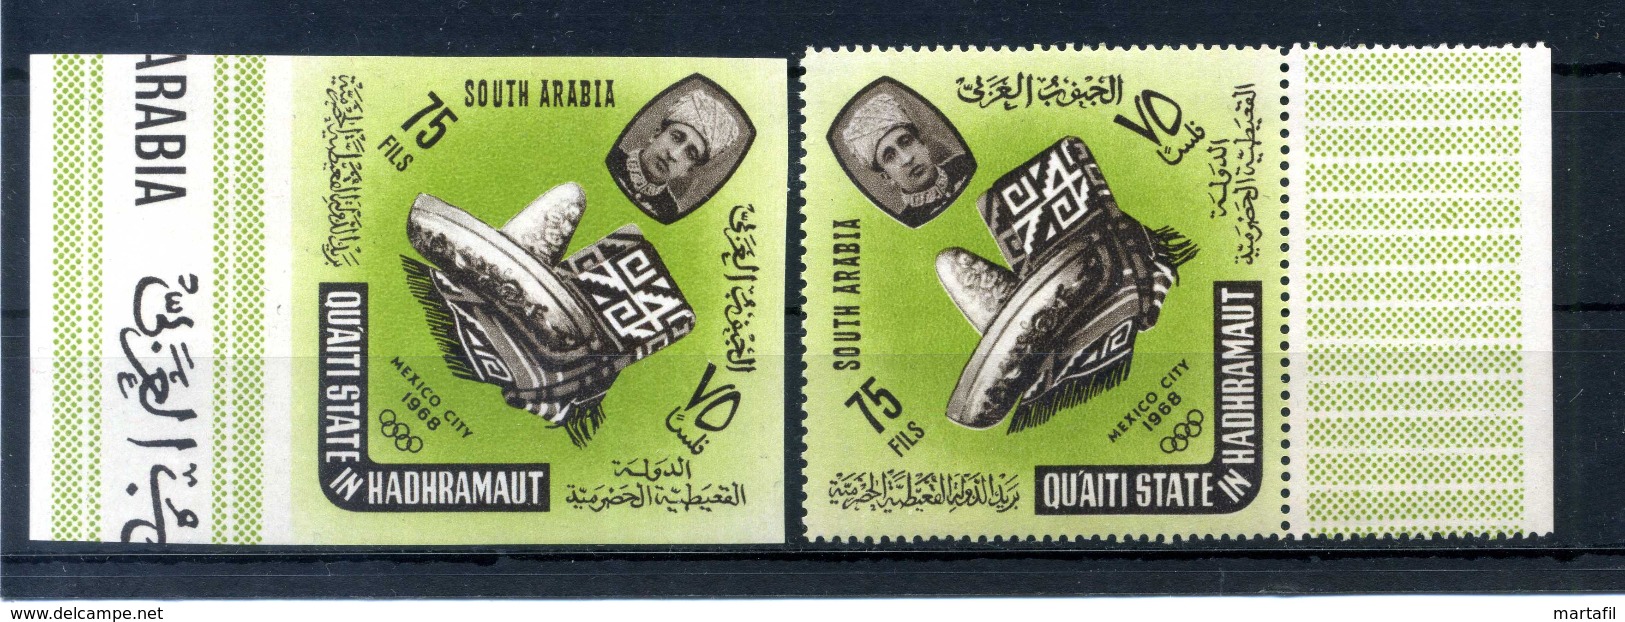 1966 Arabia (South Arabia) Qu'aiti State In Hadhramaut MNH ** SC1V + IMPERF - Saudi-Arabien